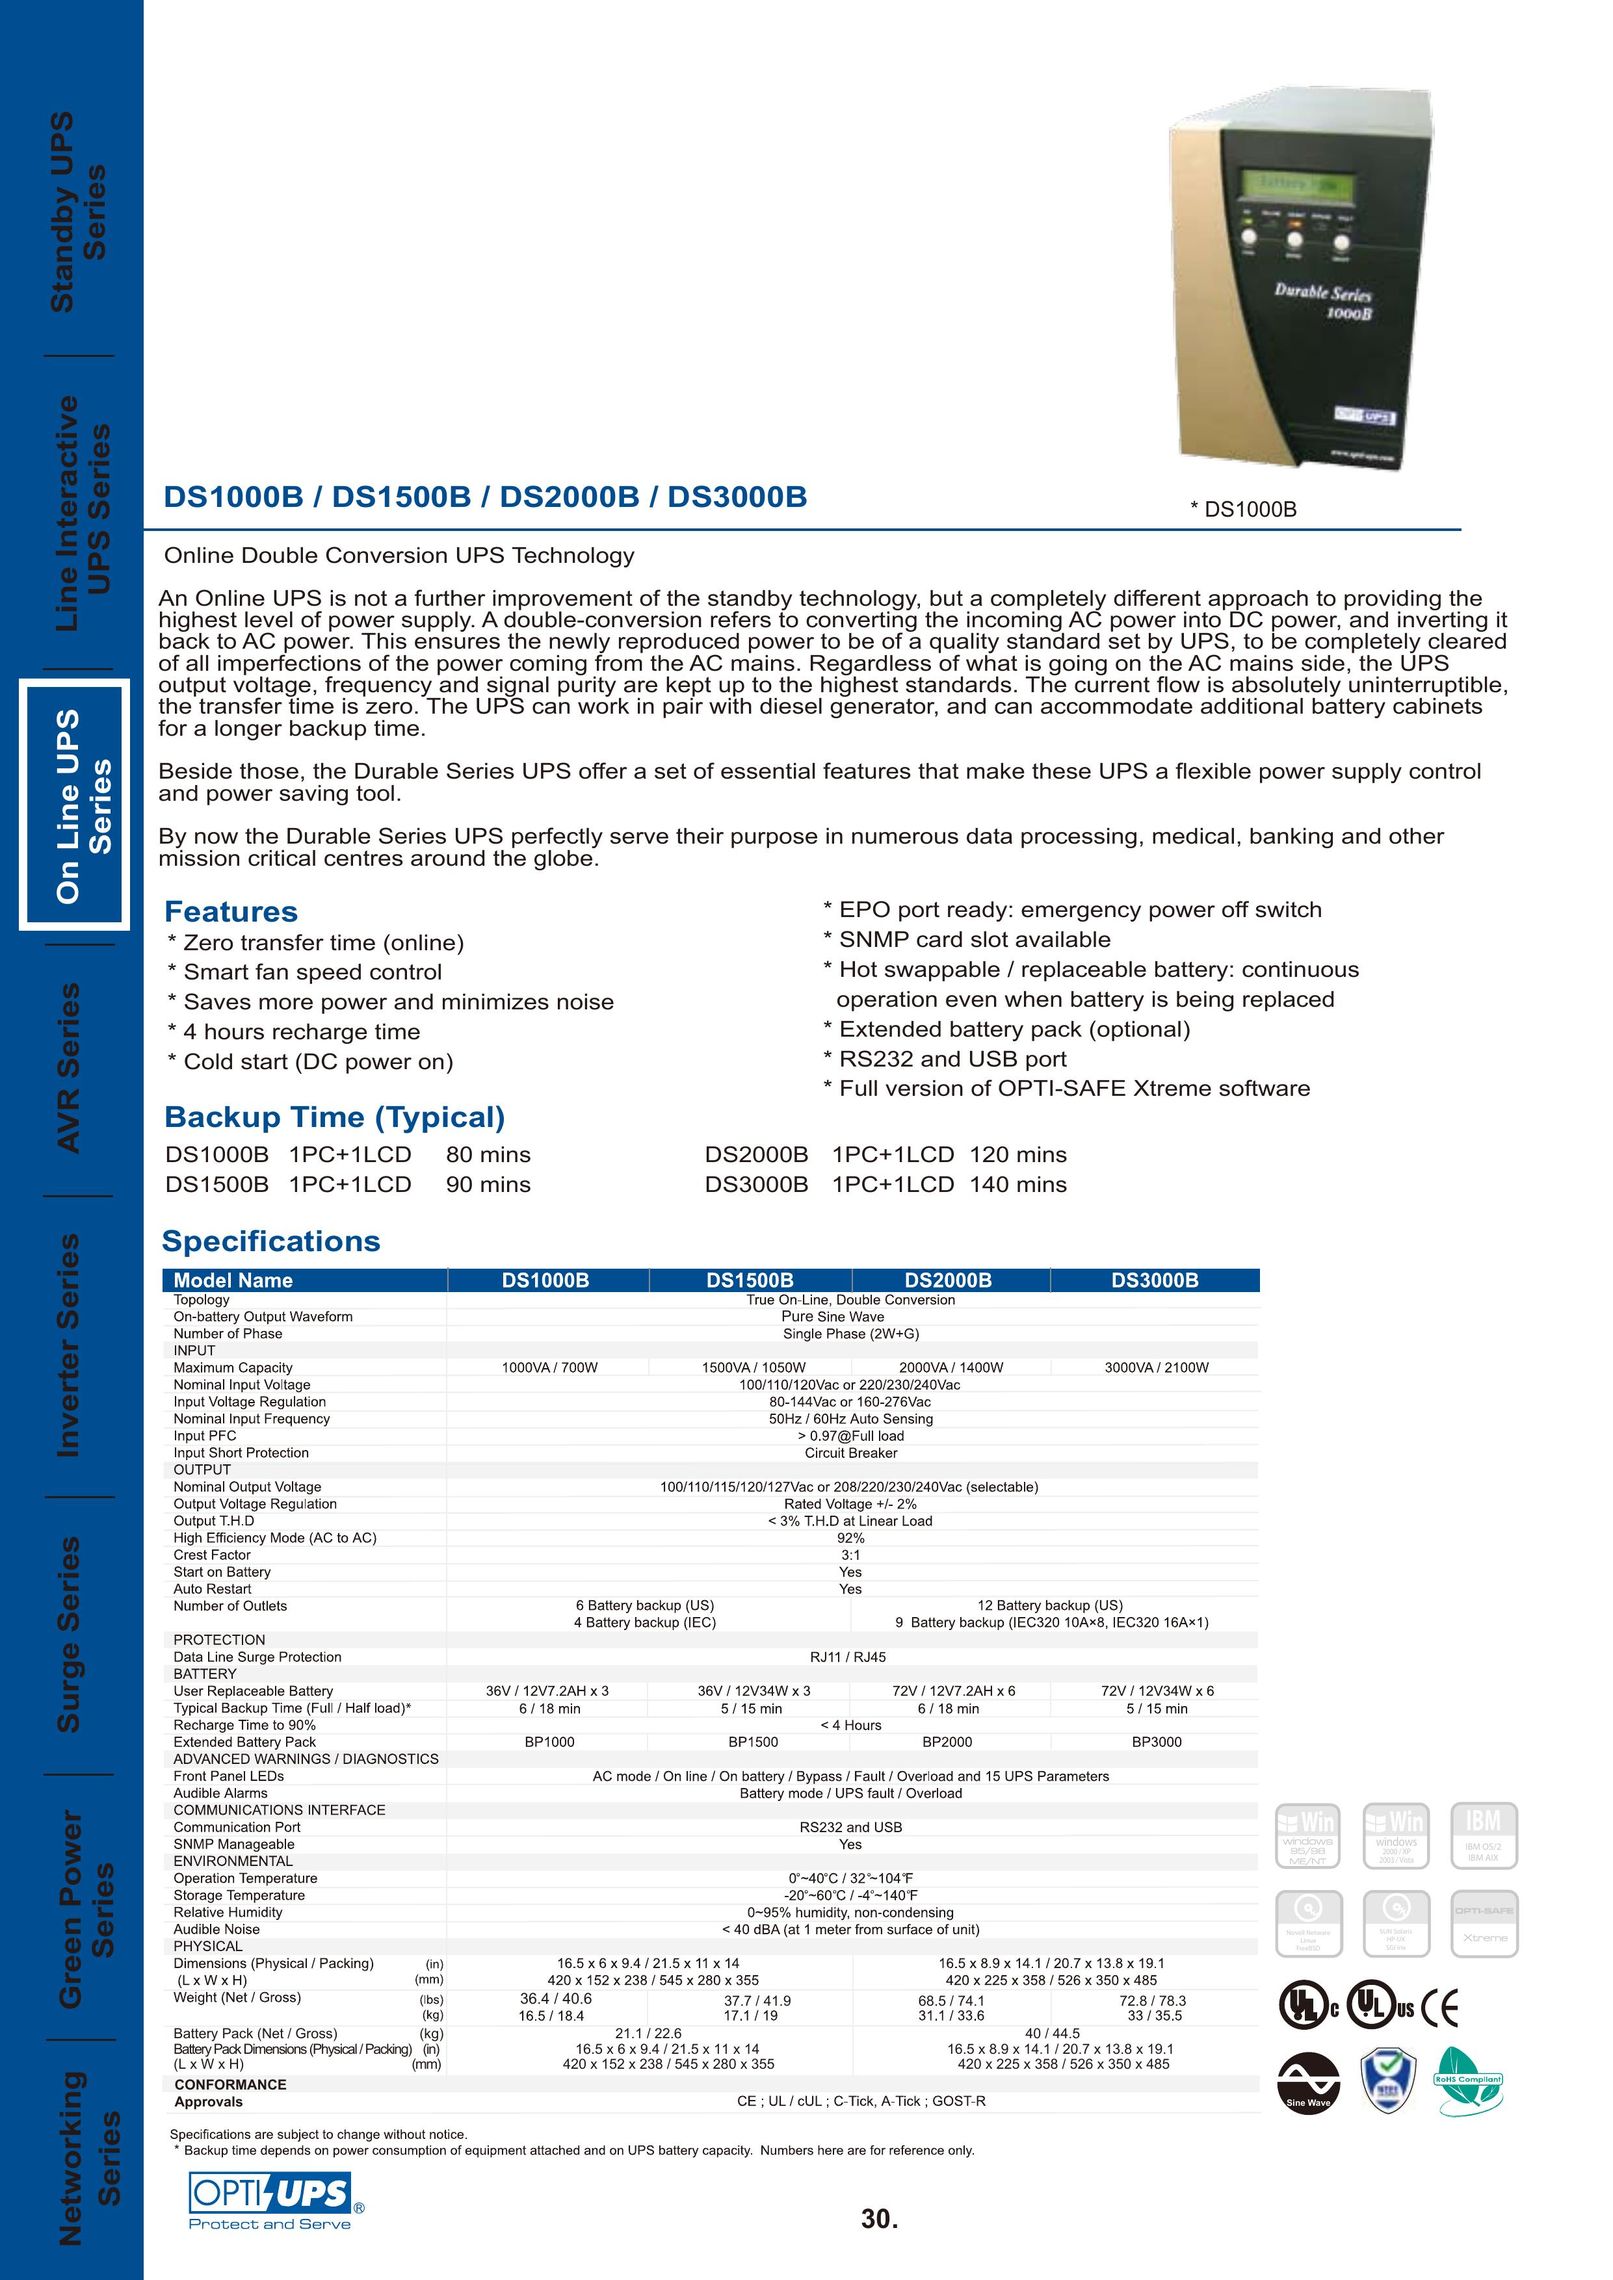 OPTI-UPS DS2000B Power Supply User Manual